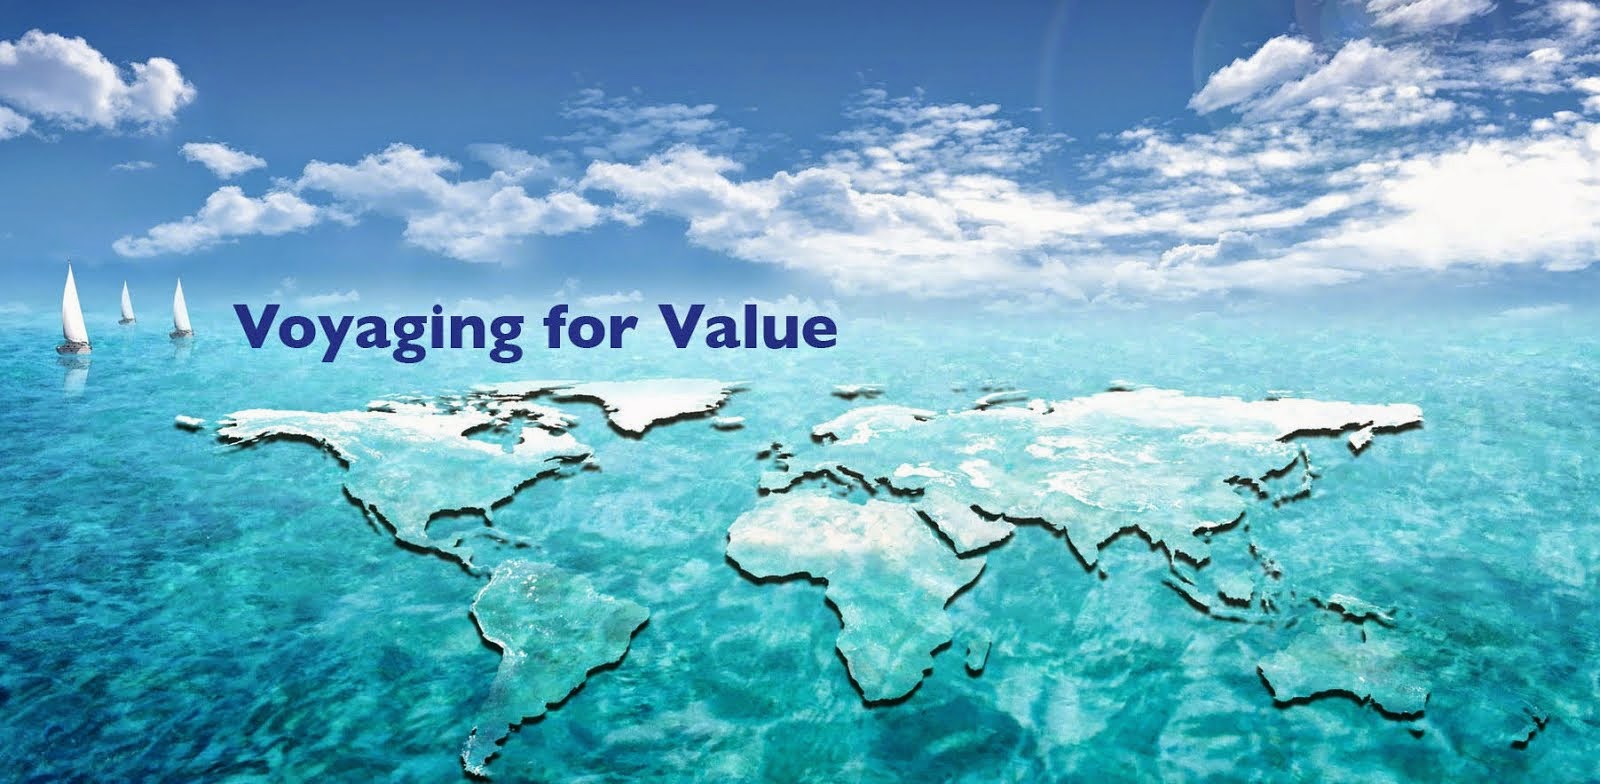 Voyaging for Value